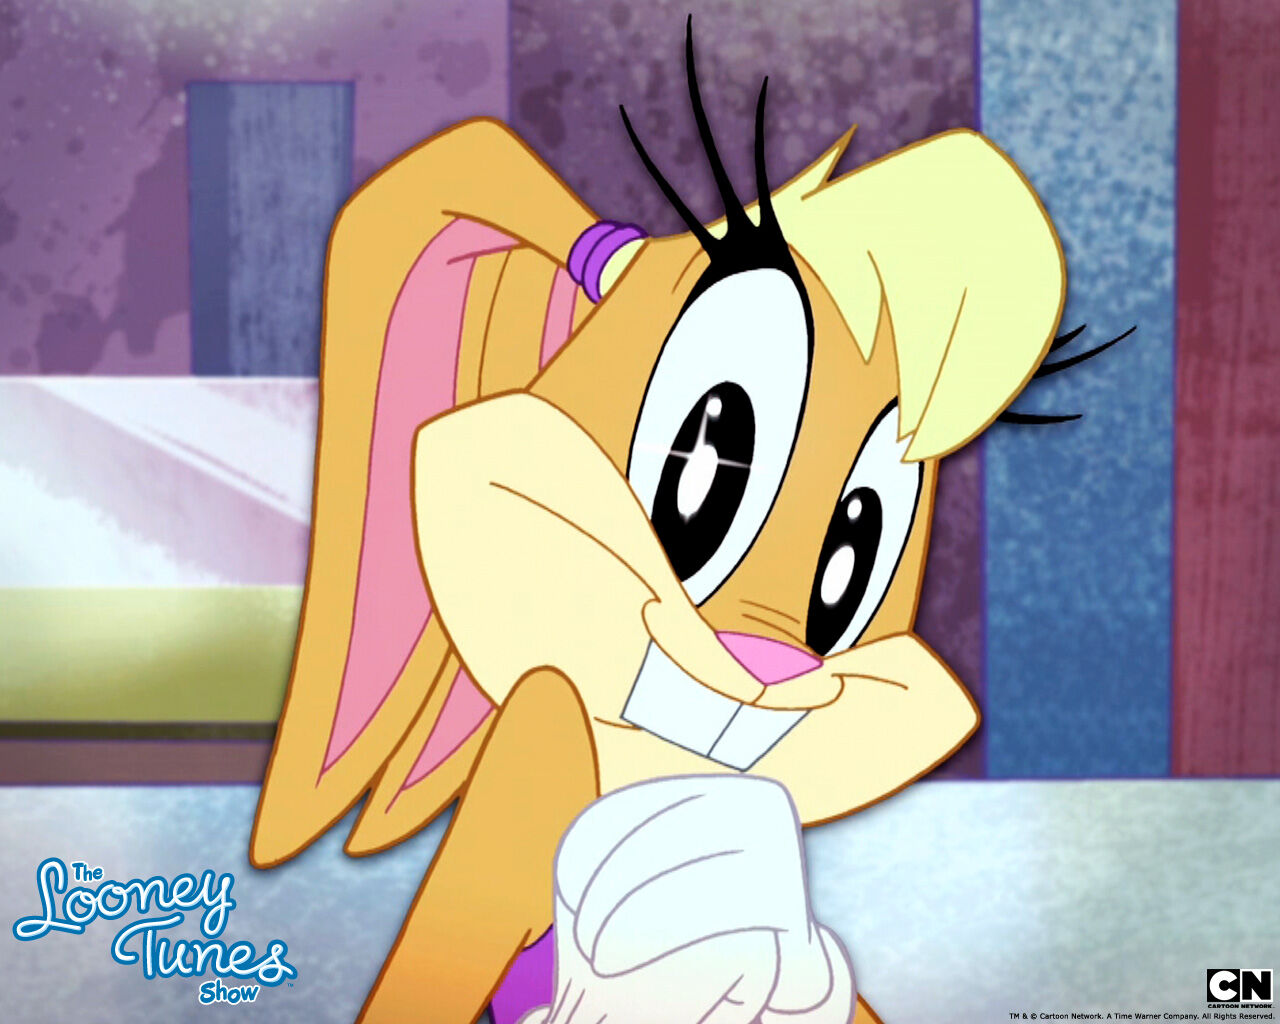 Lola Bunny | Warner Bros. Entertainment Wiki | Fandom